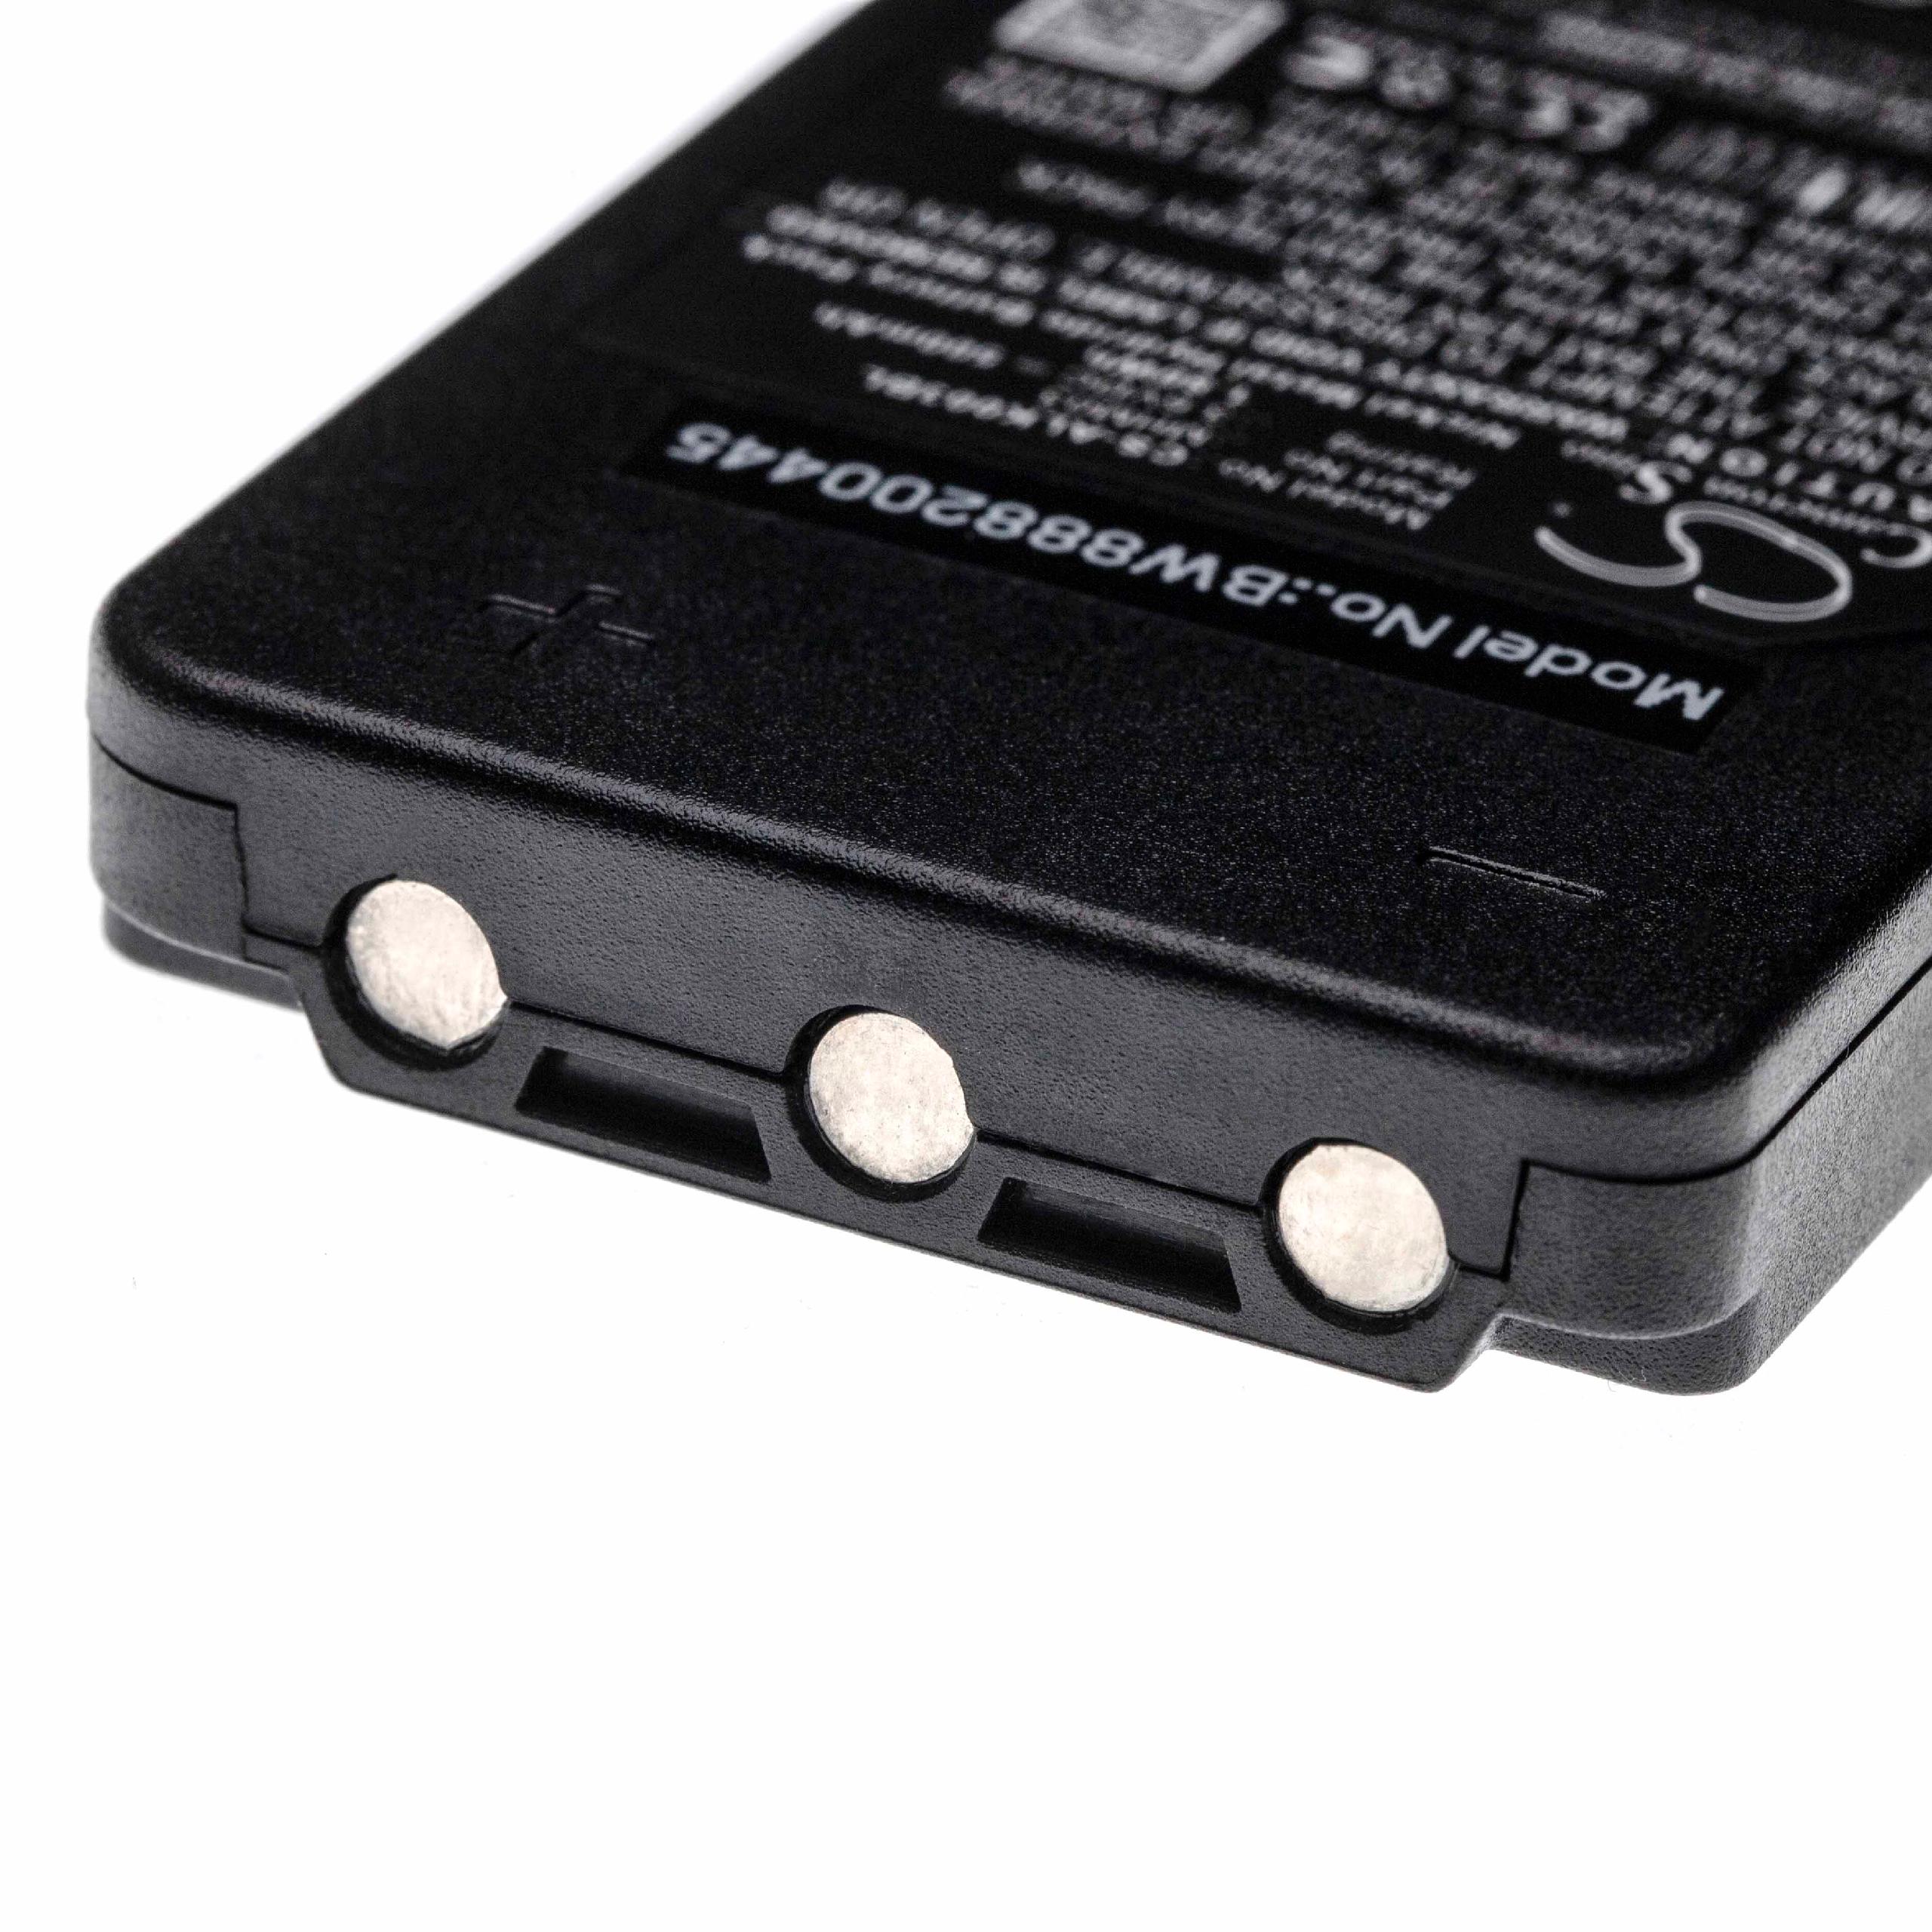 Industrial Remote Control Battery Replacement for Autec MHM03, LPM01LI, LPM01 - 500mAh 3.6V NiMH